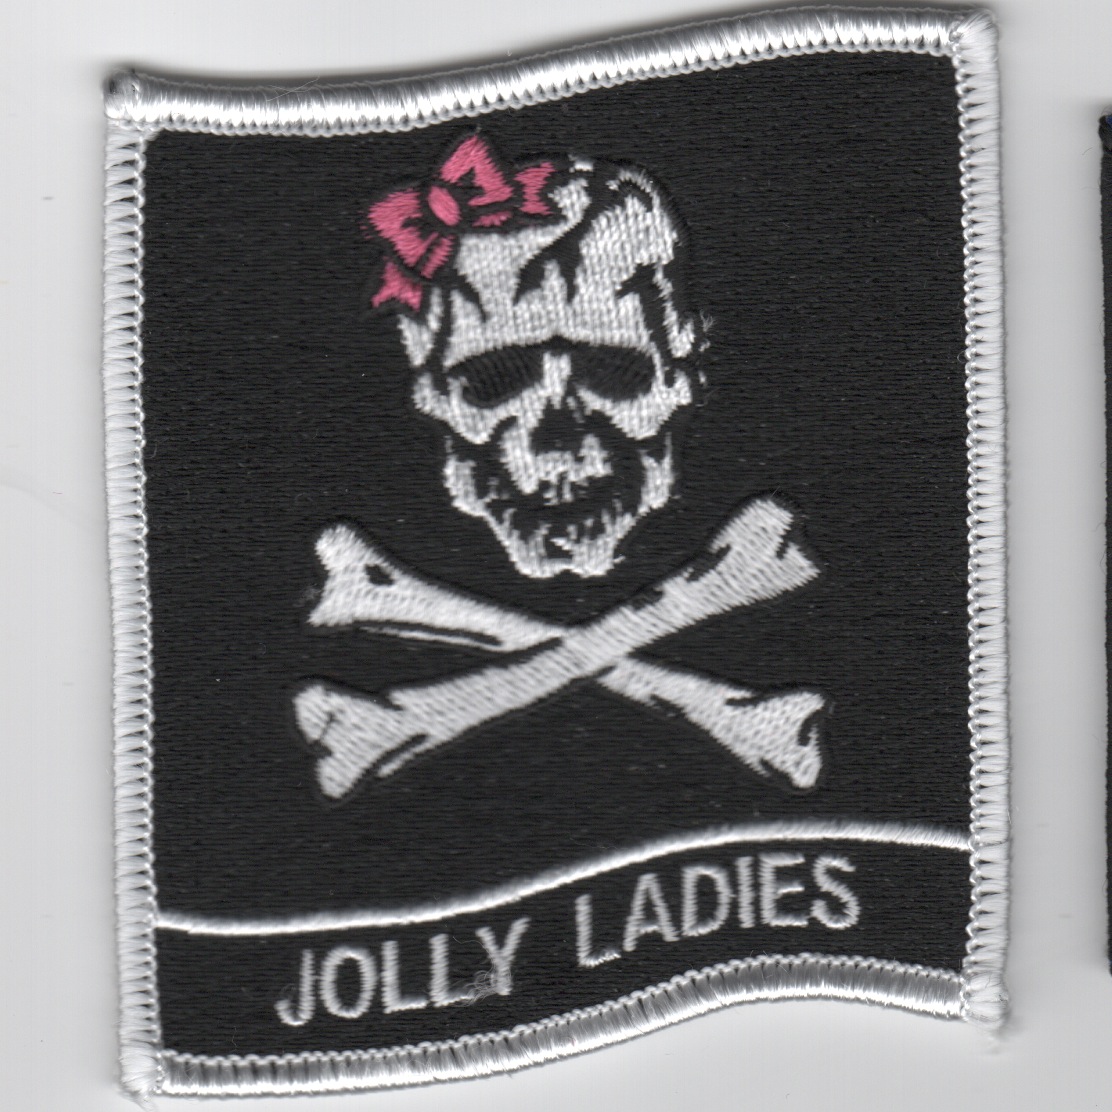 VF-103 'Jolly Ladies' Patch